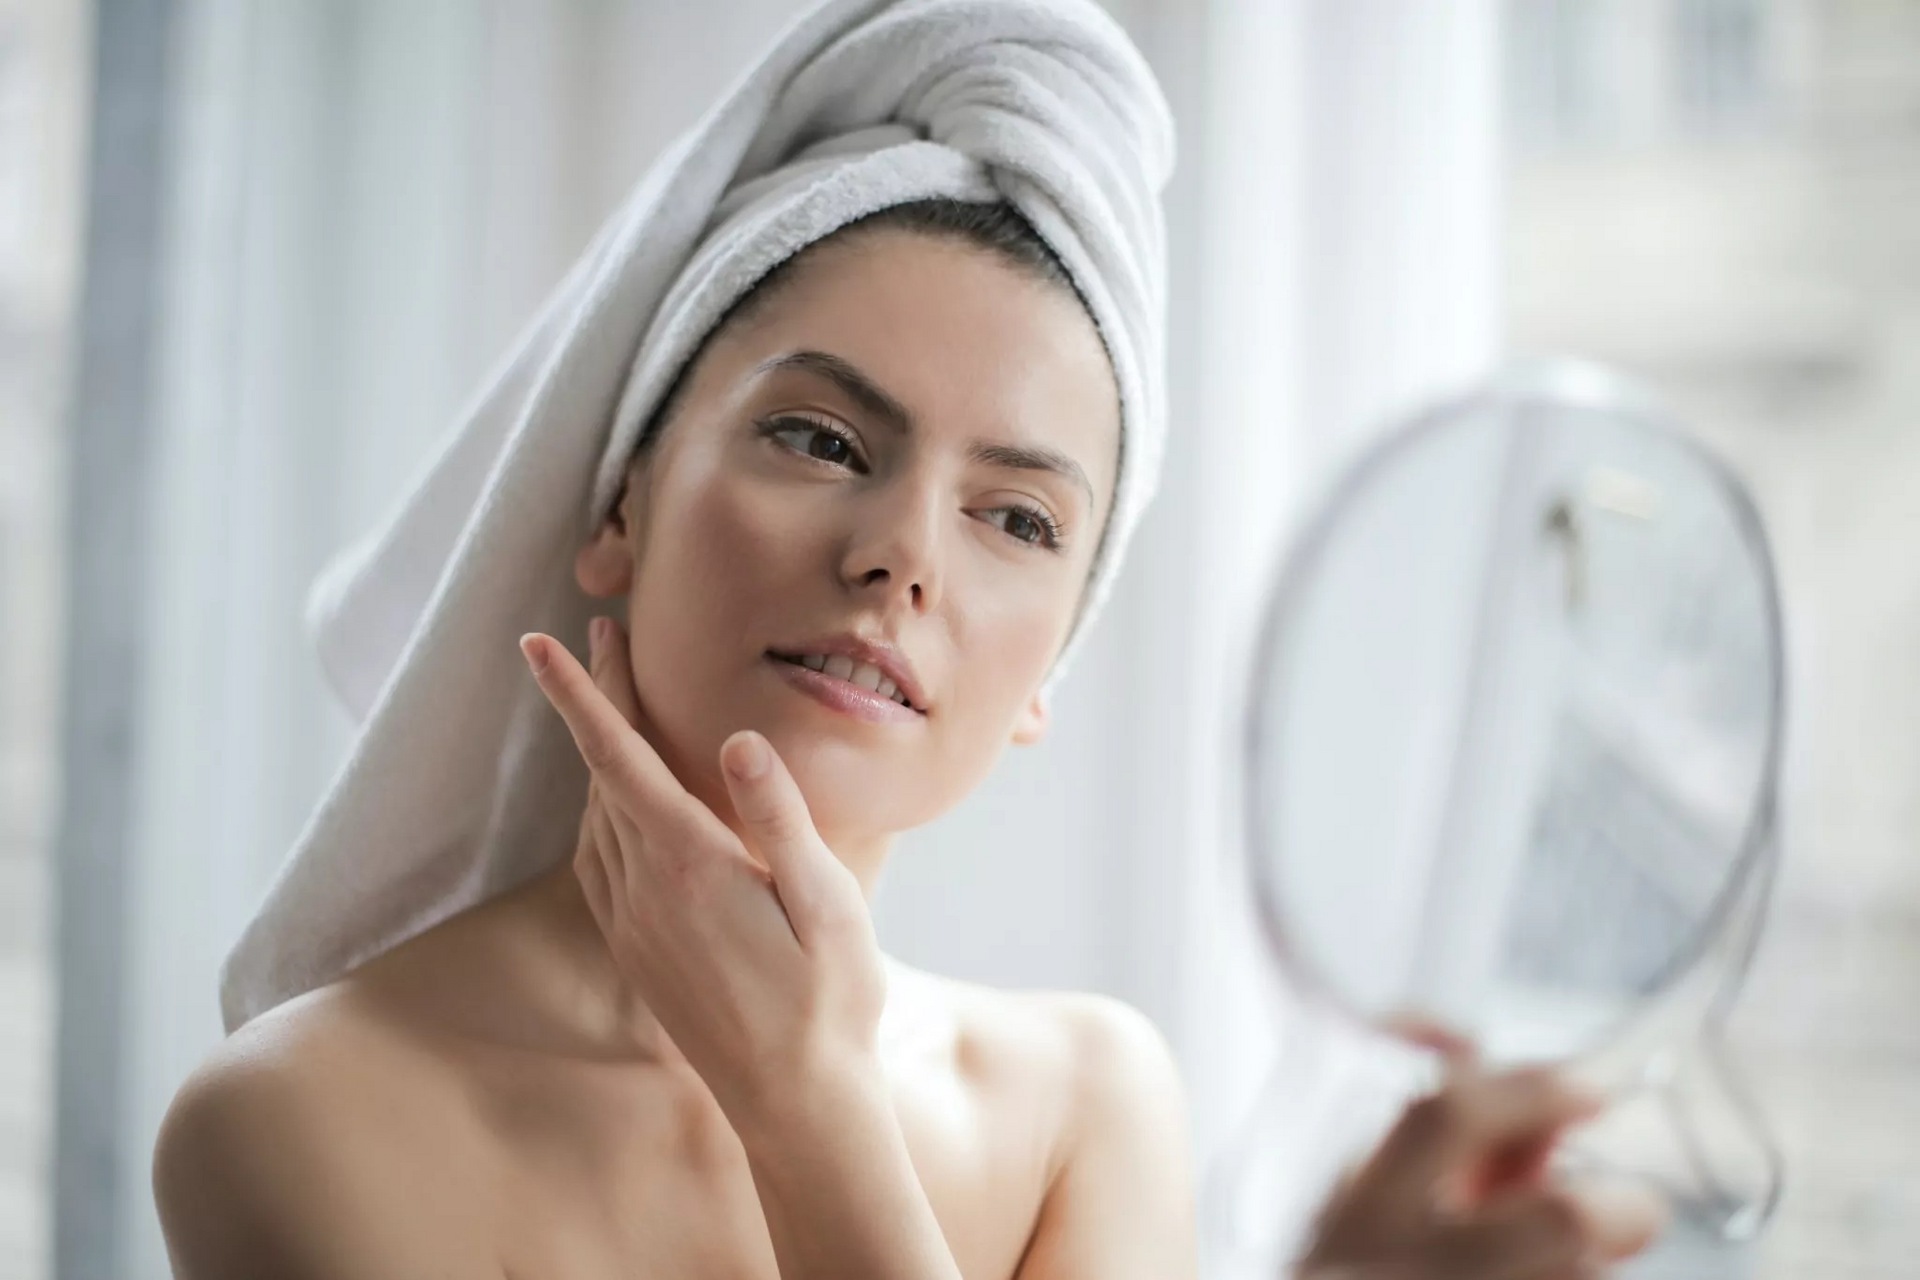 6 Essential Bedtime Skincare Tips to Prevent Acne